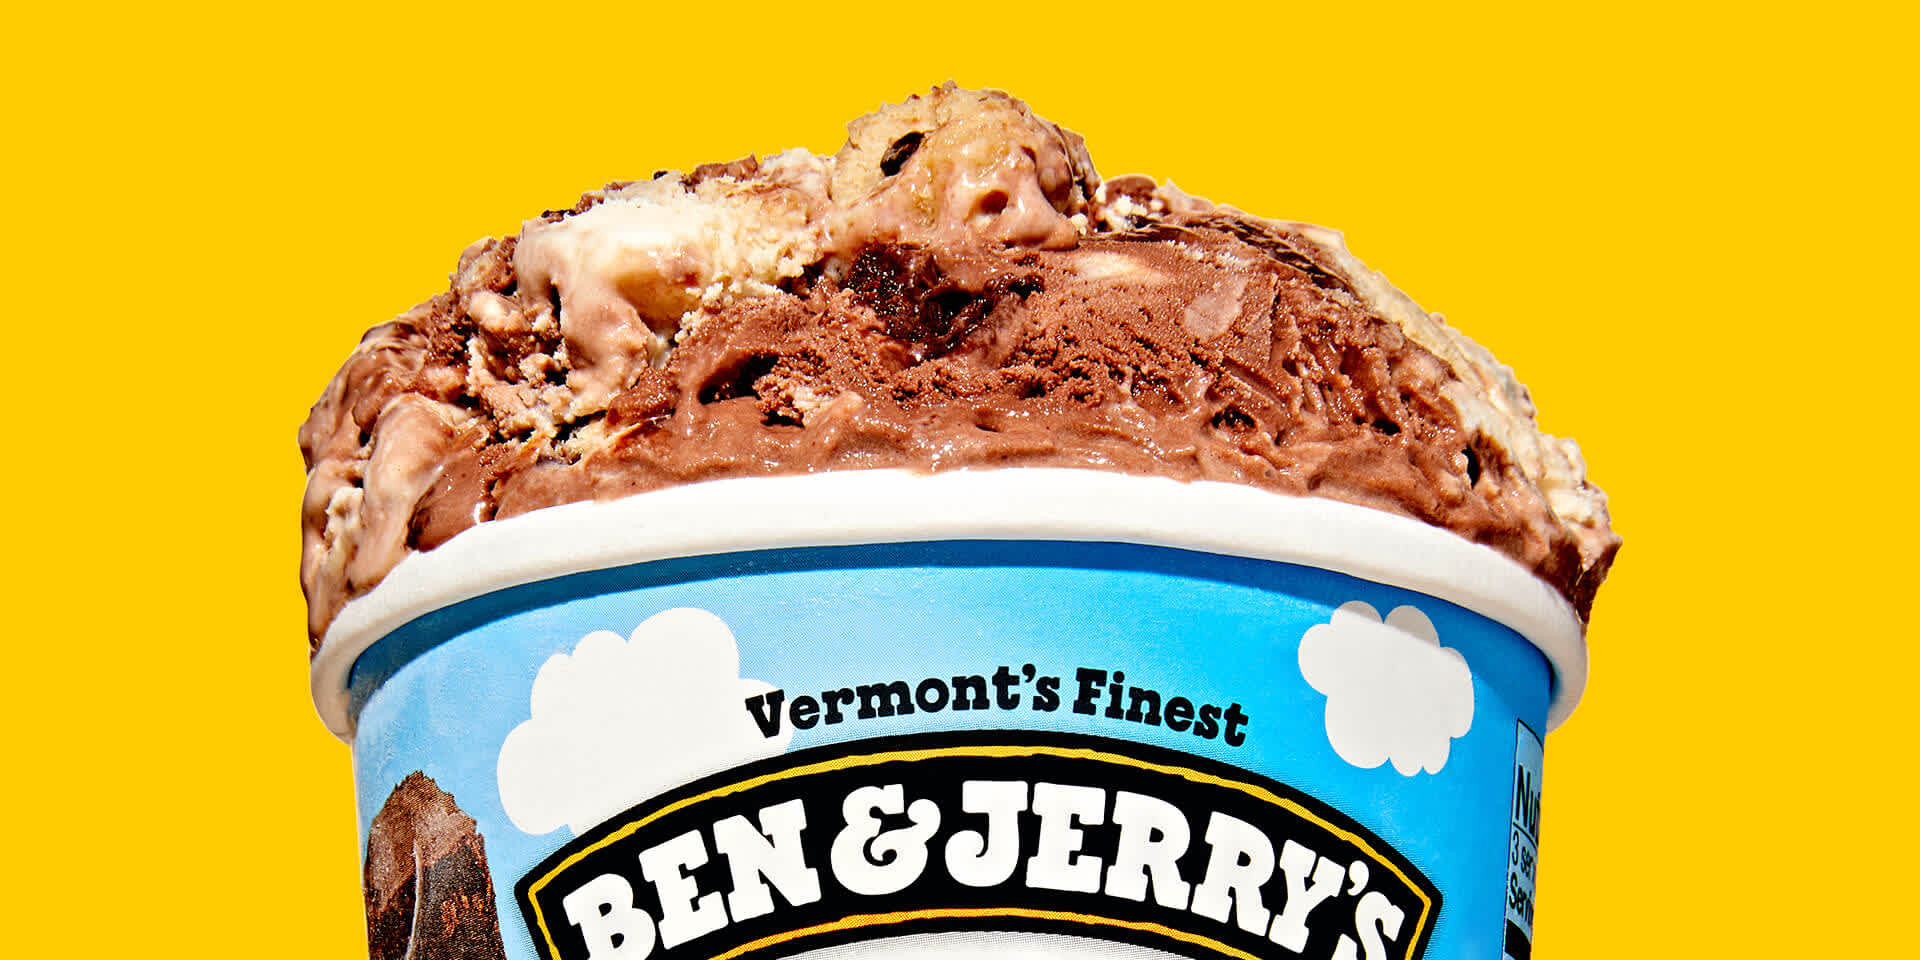 Vermont's Finest Ben & Jerry's Ice Cream